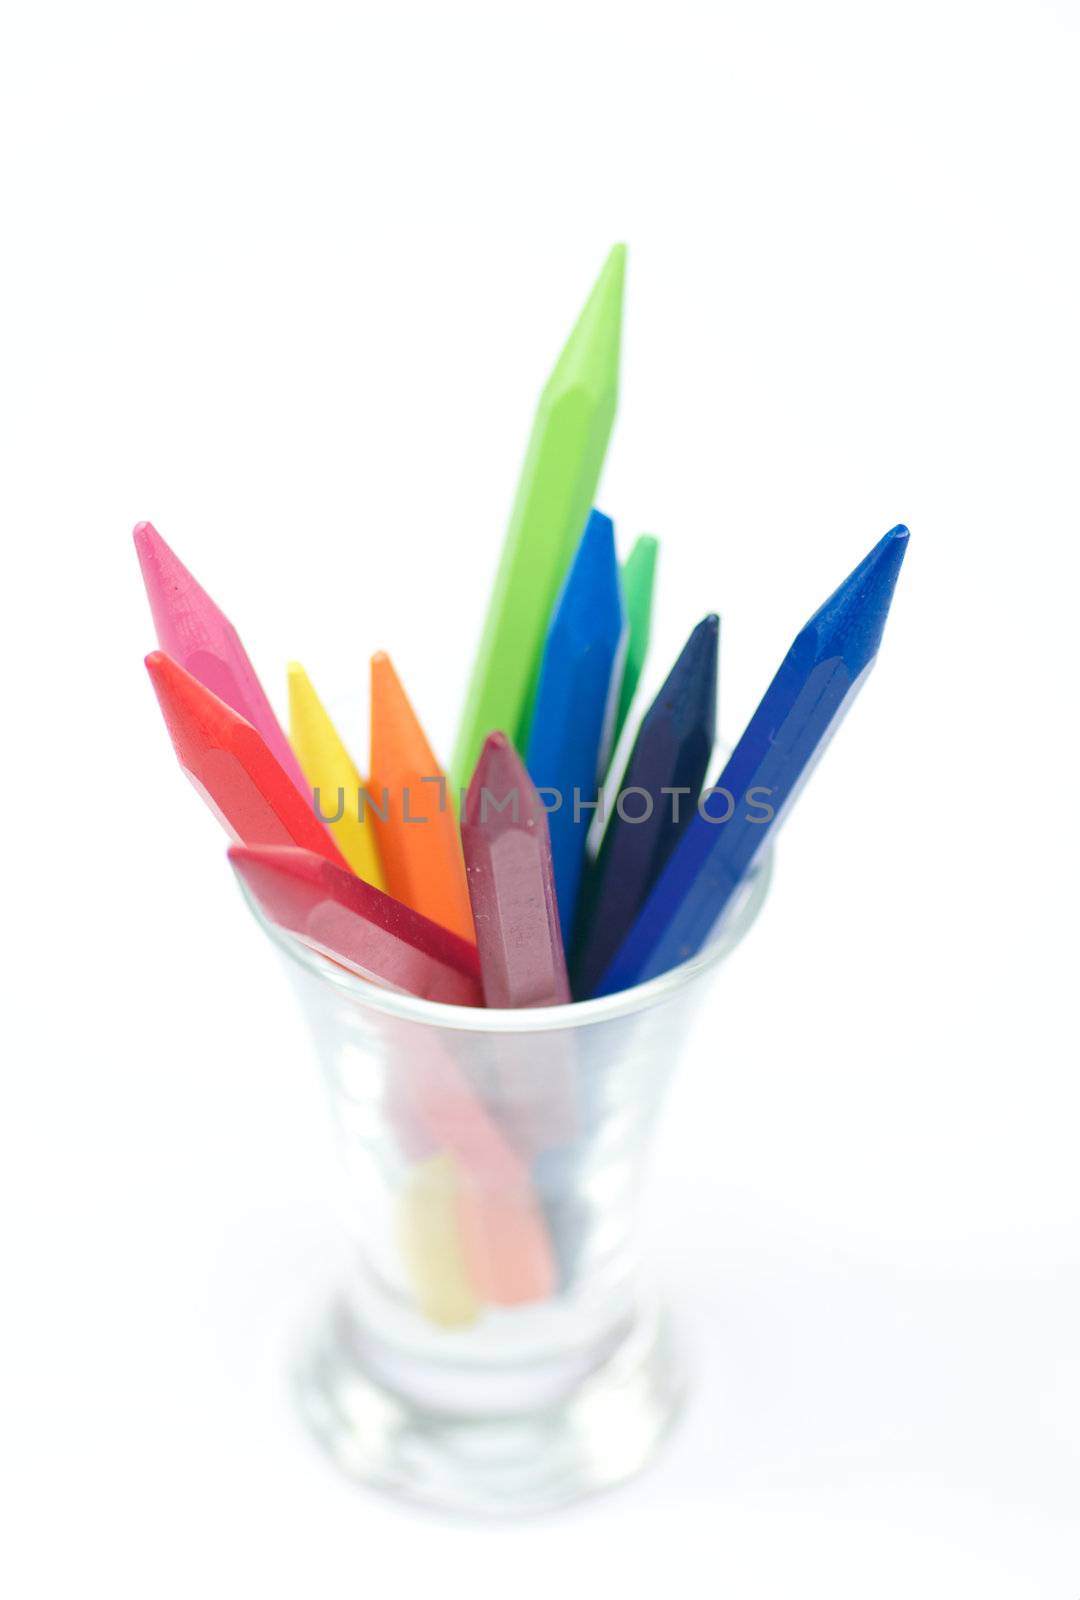 Rainbow Colored pencils by zhekos